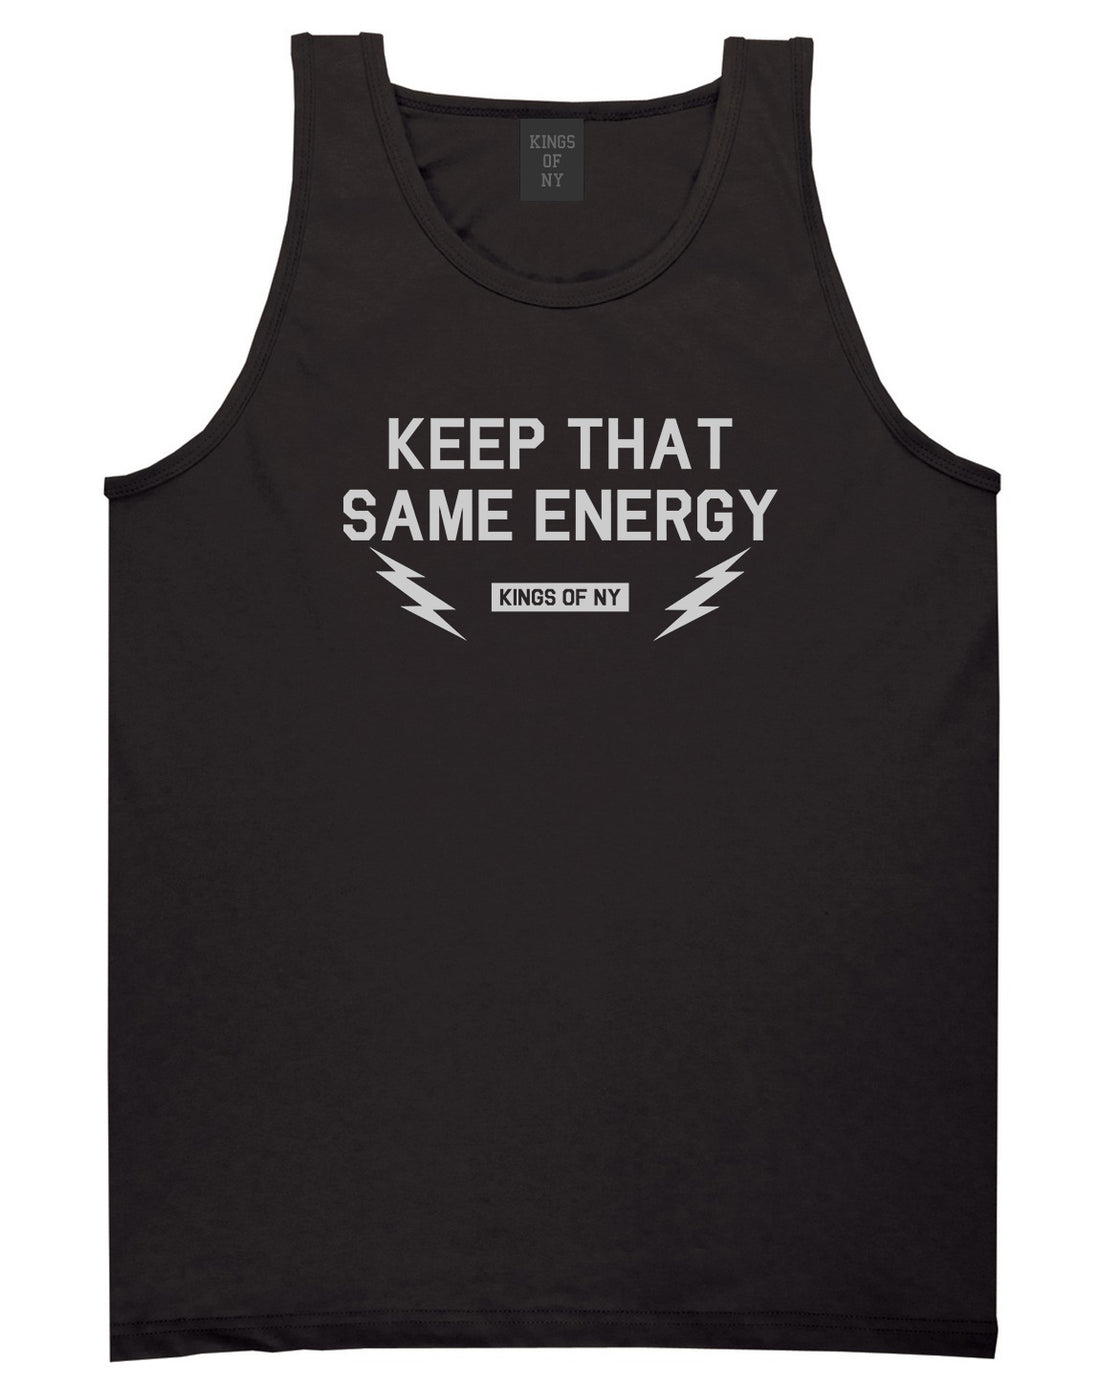 Keep That Same Energy Mens Tank Top Shirt Black